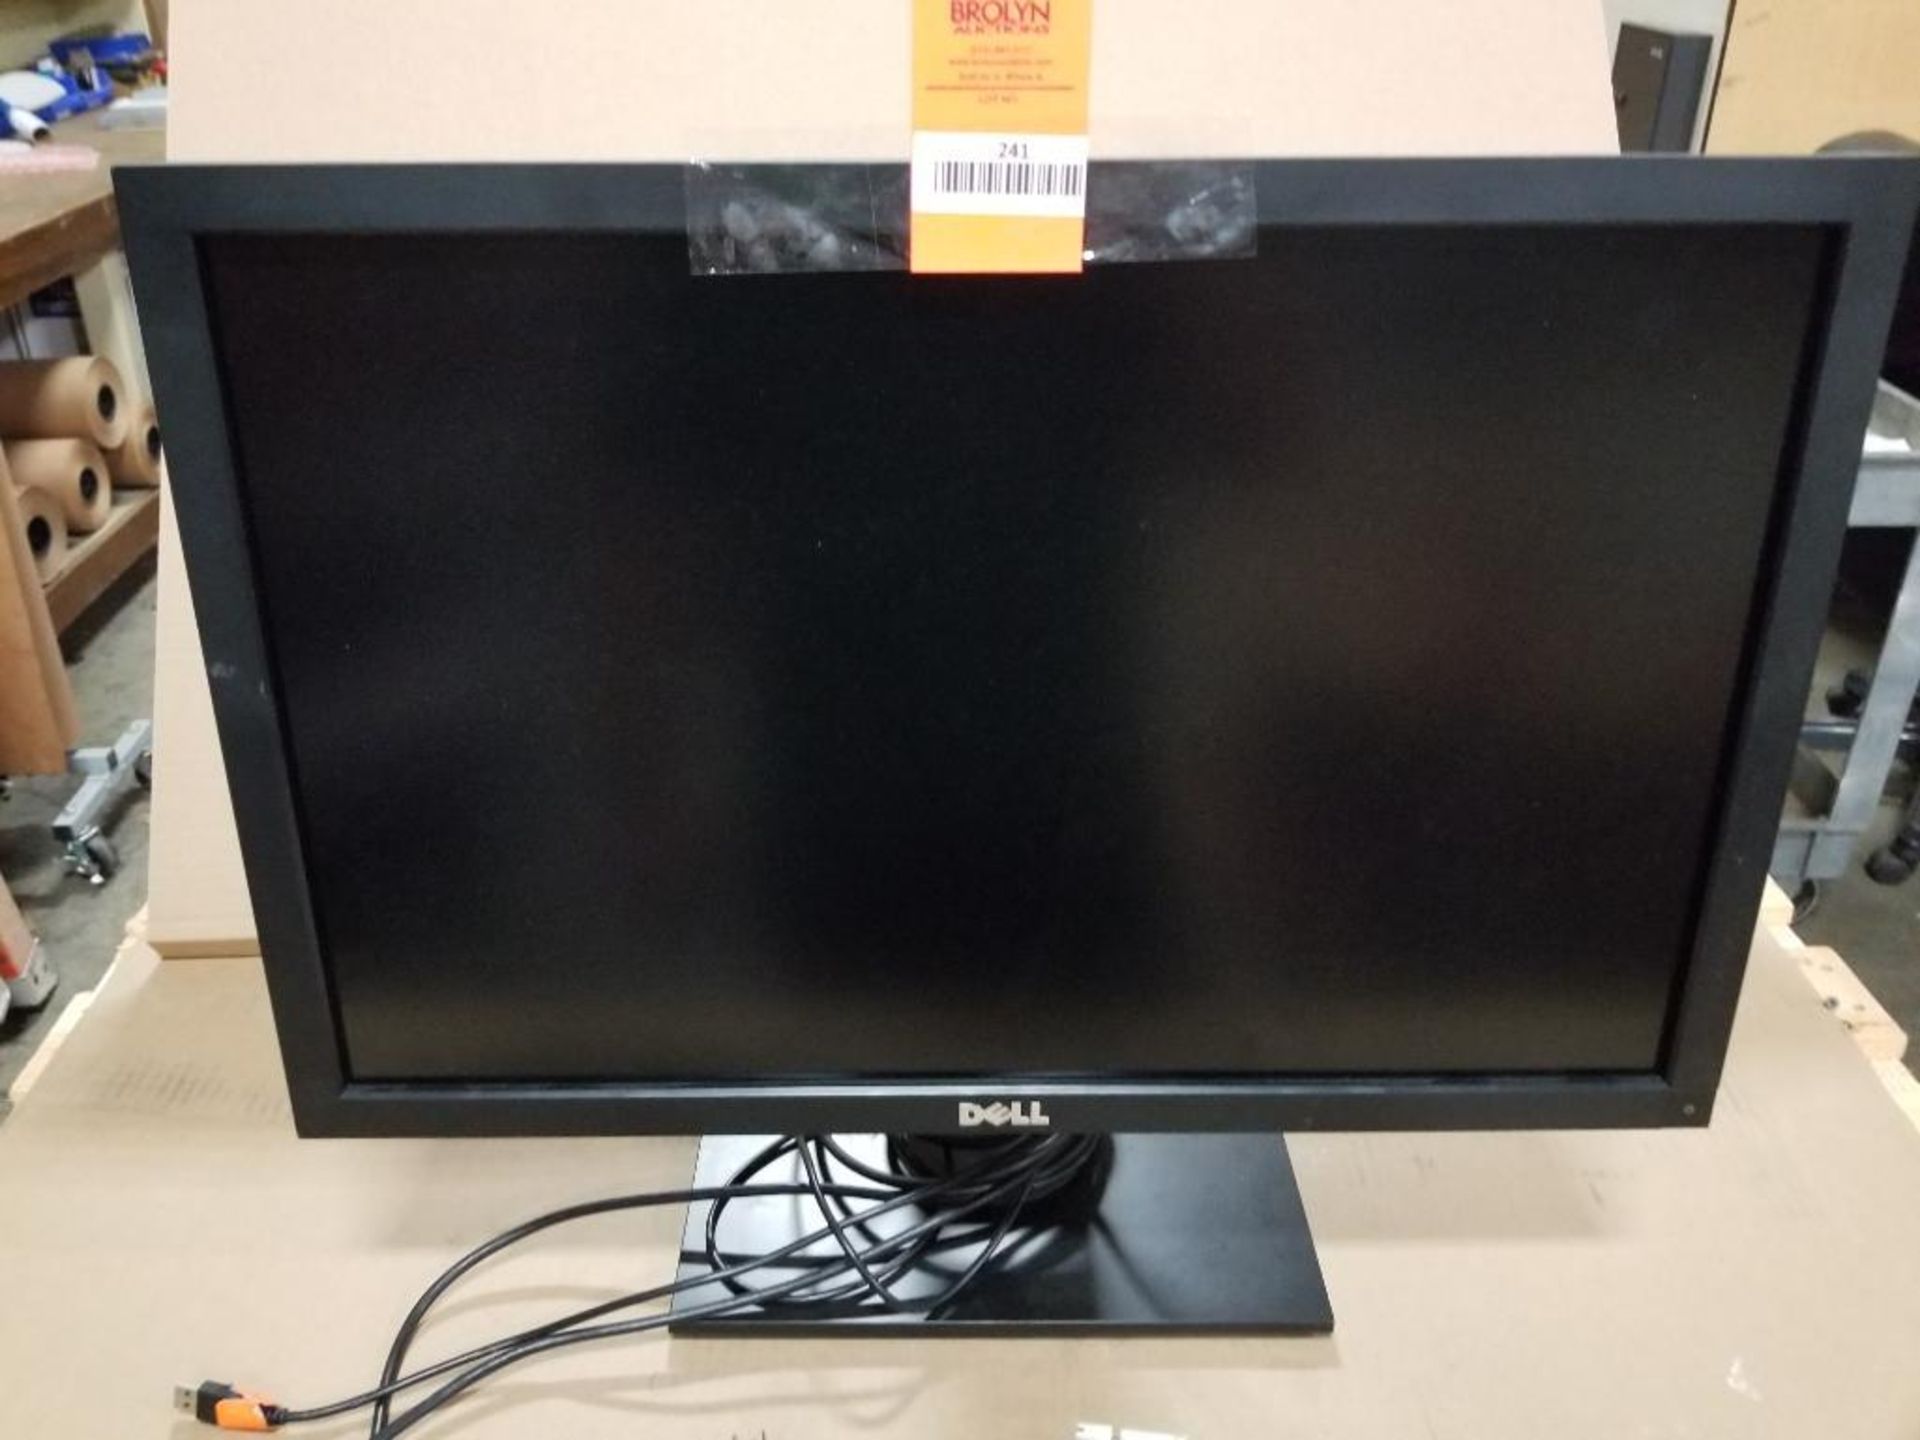 Dell 2709Wb UltraSharp widescreen flat panel 27" monitor.